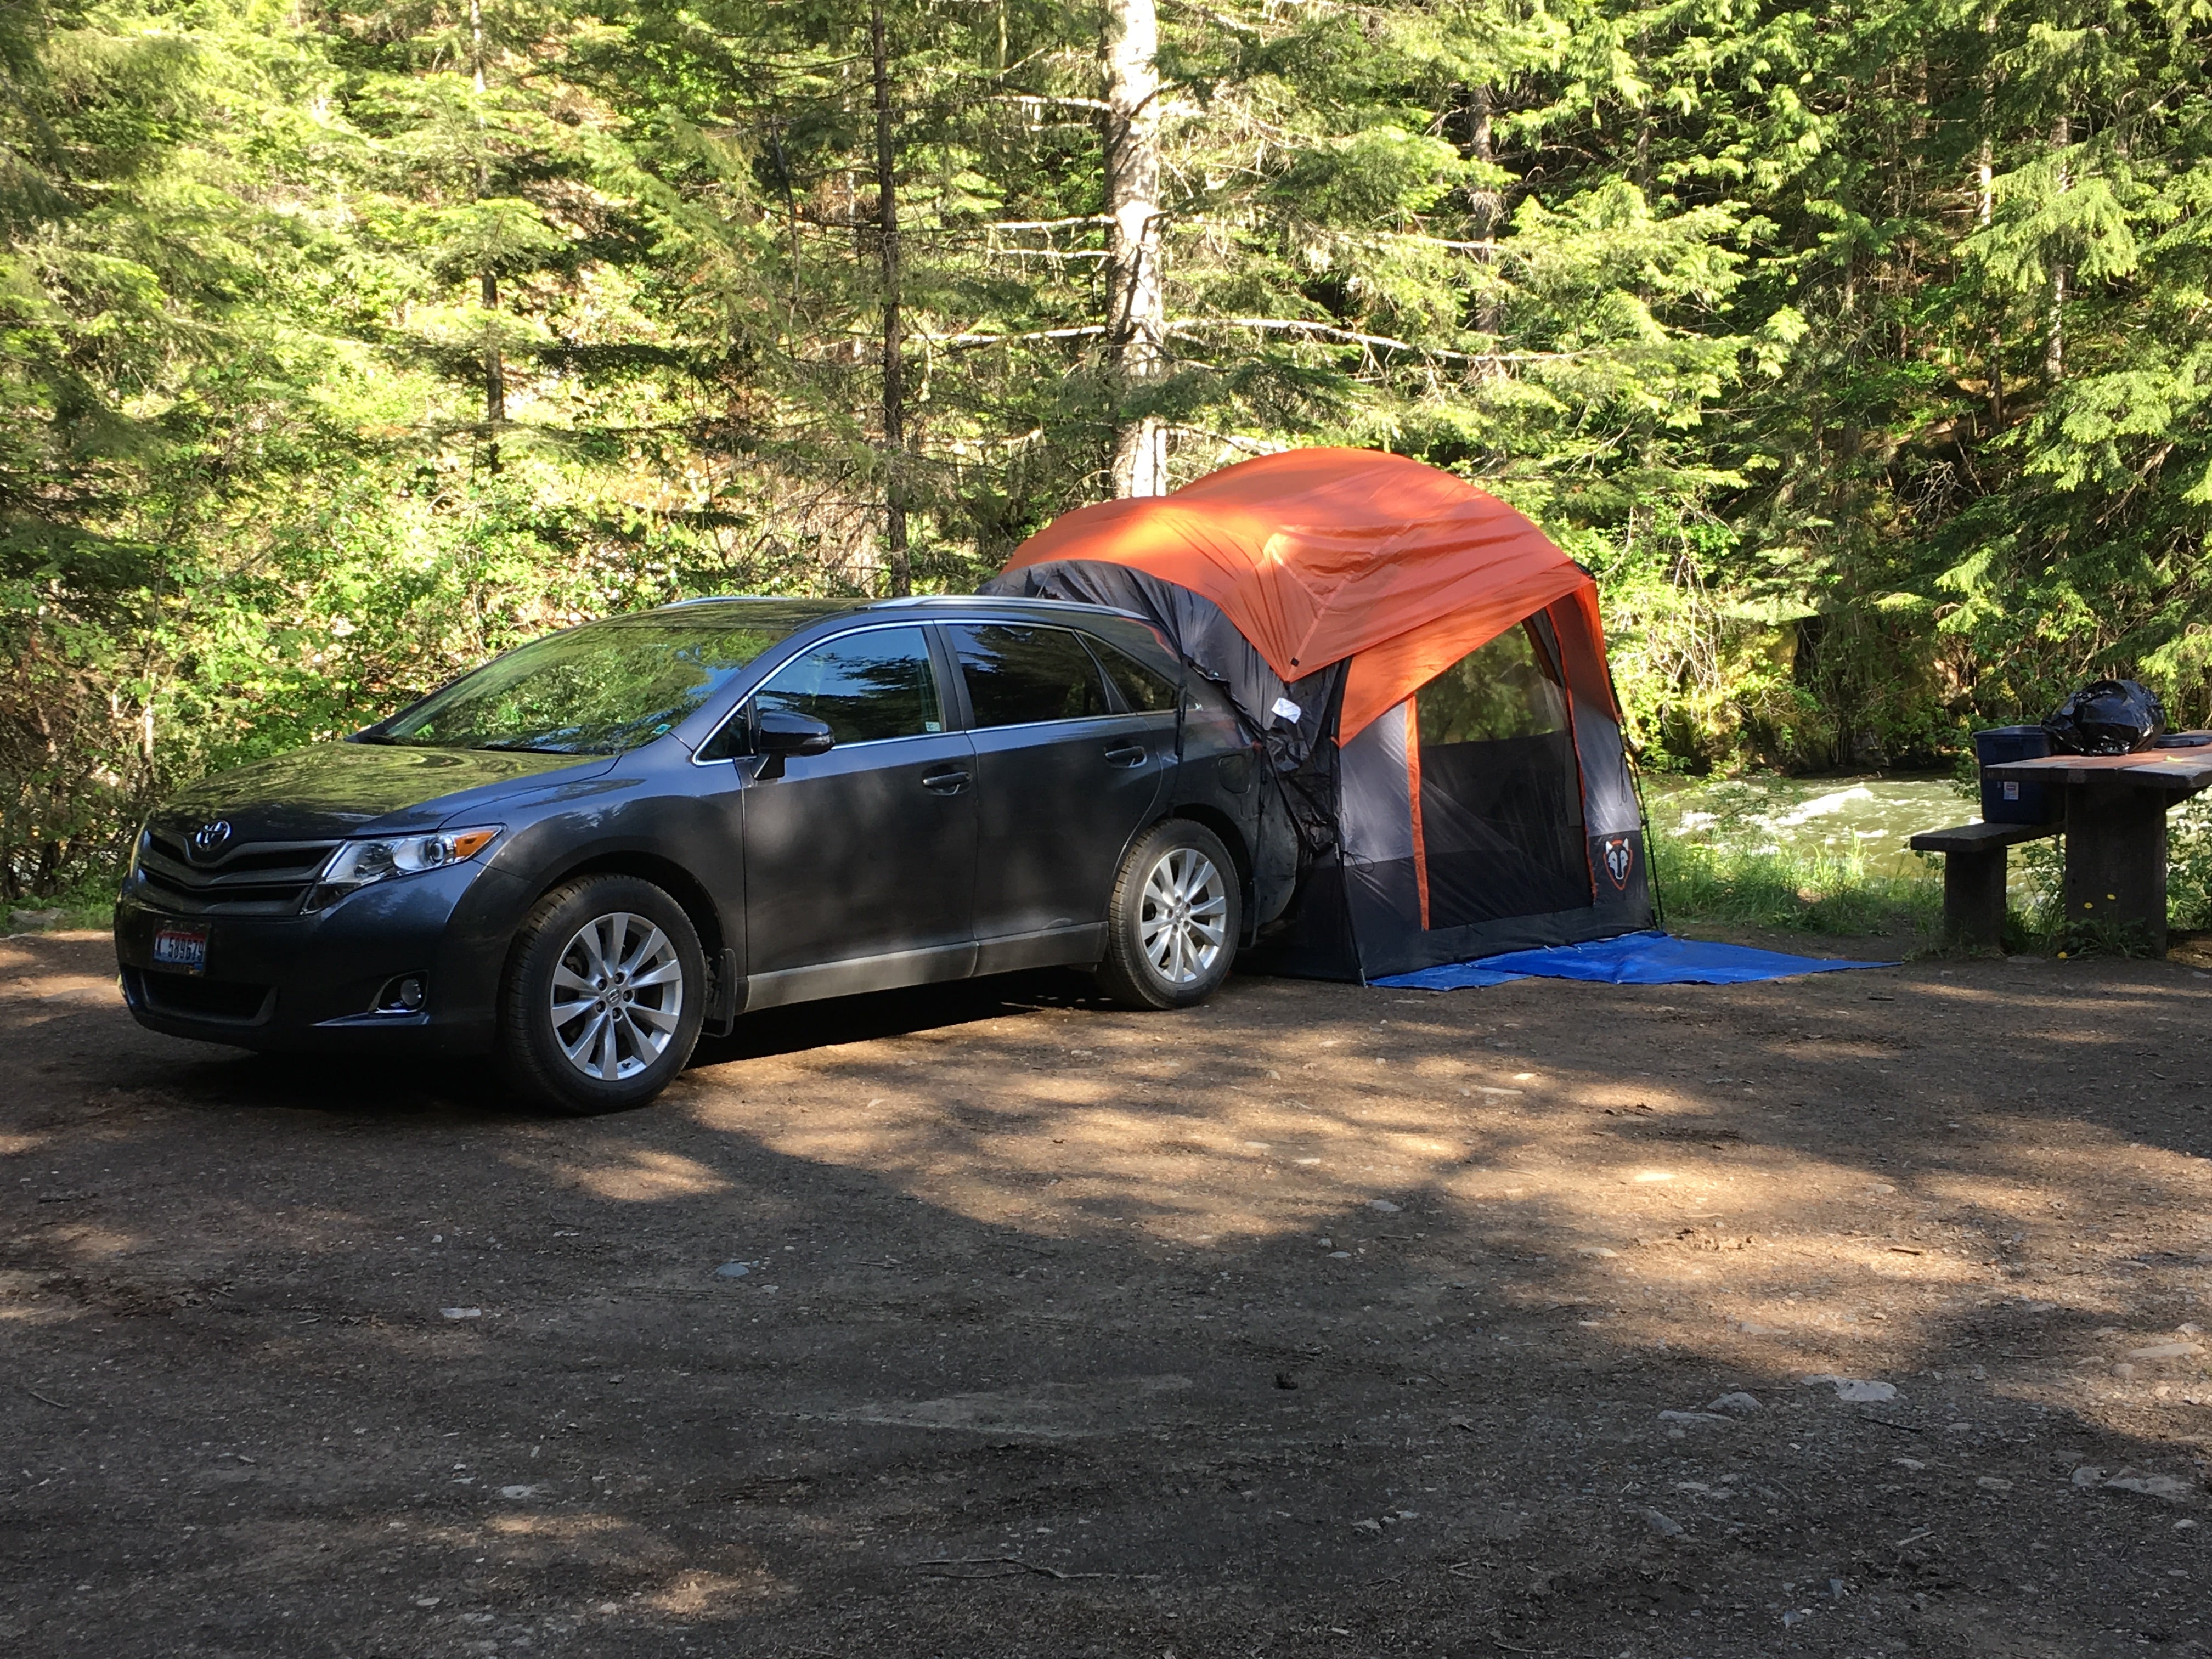 Tent/SUV combo - July 2018